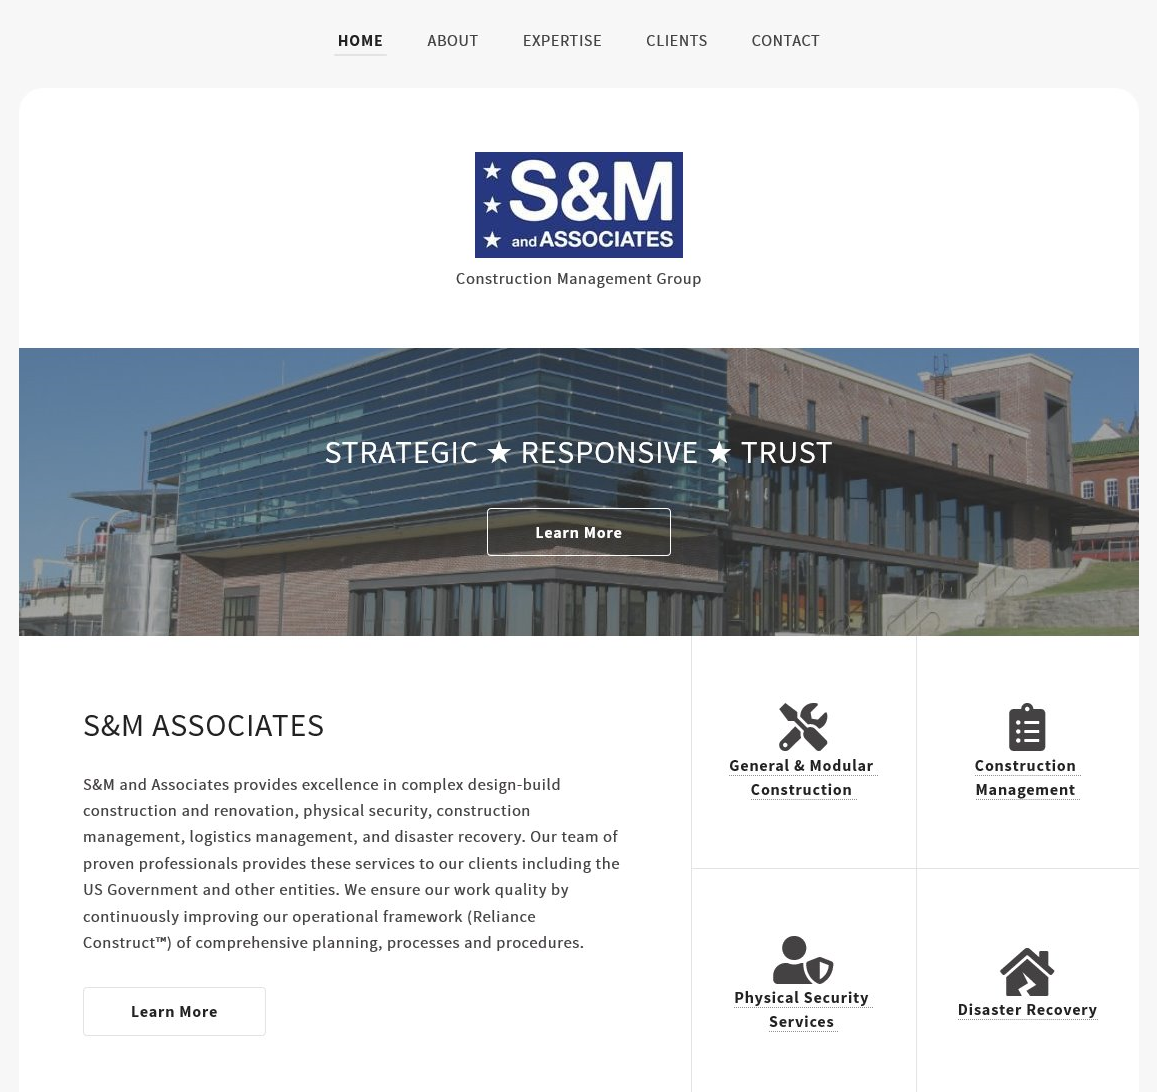 S&M and Associates - www.sandmassociates.com - Website for S&M and Associates Construction Management Group.